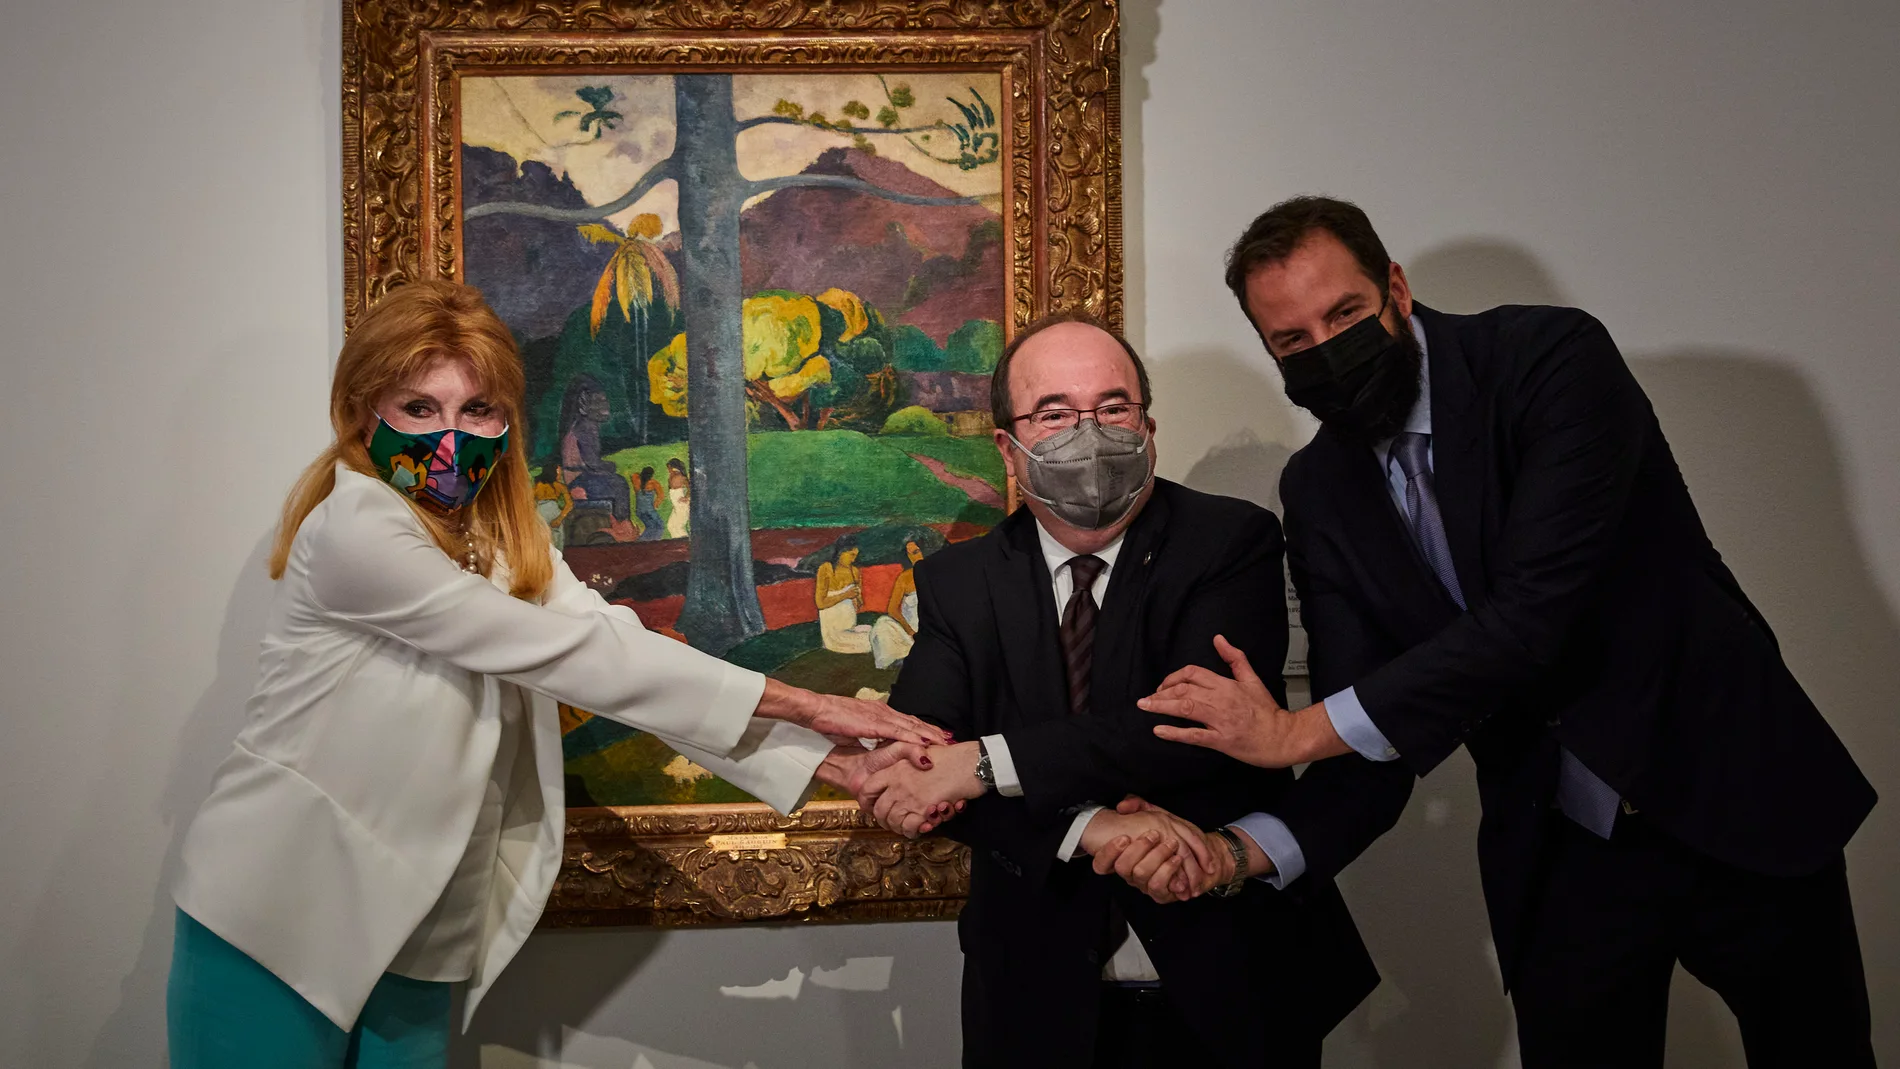 La baronesa Carmen Thyssen y ministro de Cultura, Miquel Iceta, ante la obra "Mata Mua" celebrando la firma